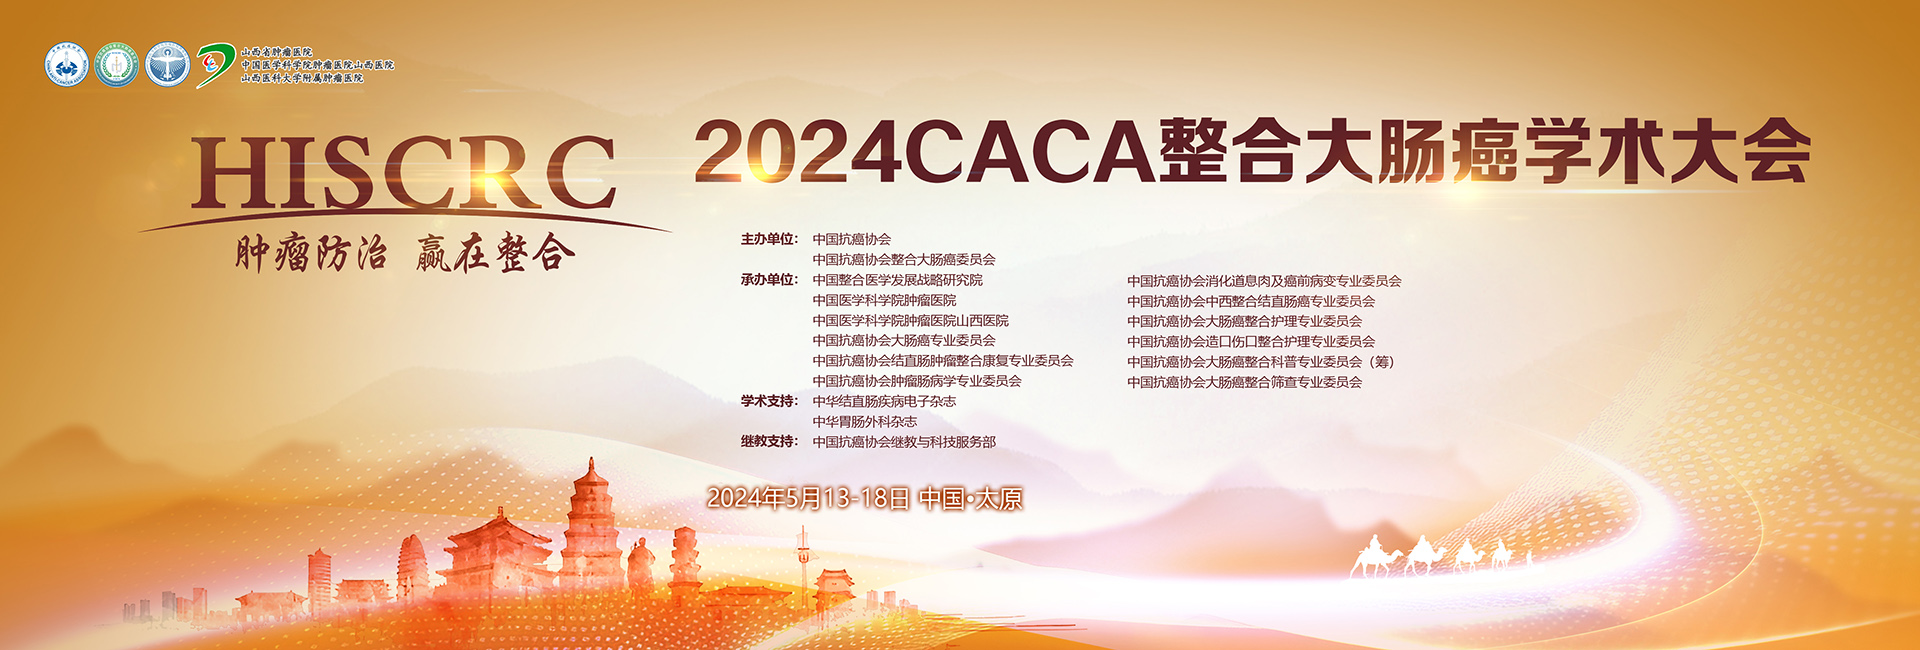 2024CACA整合大肠癌大会